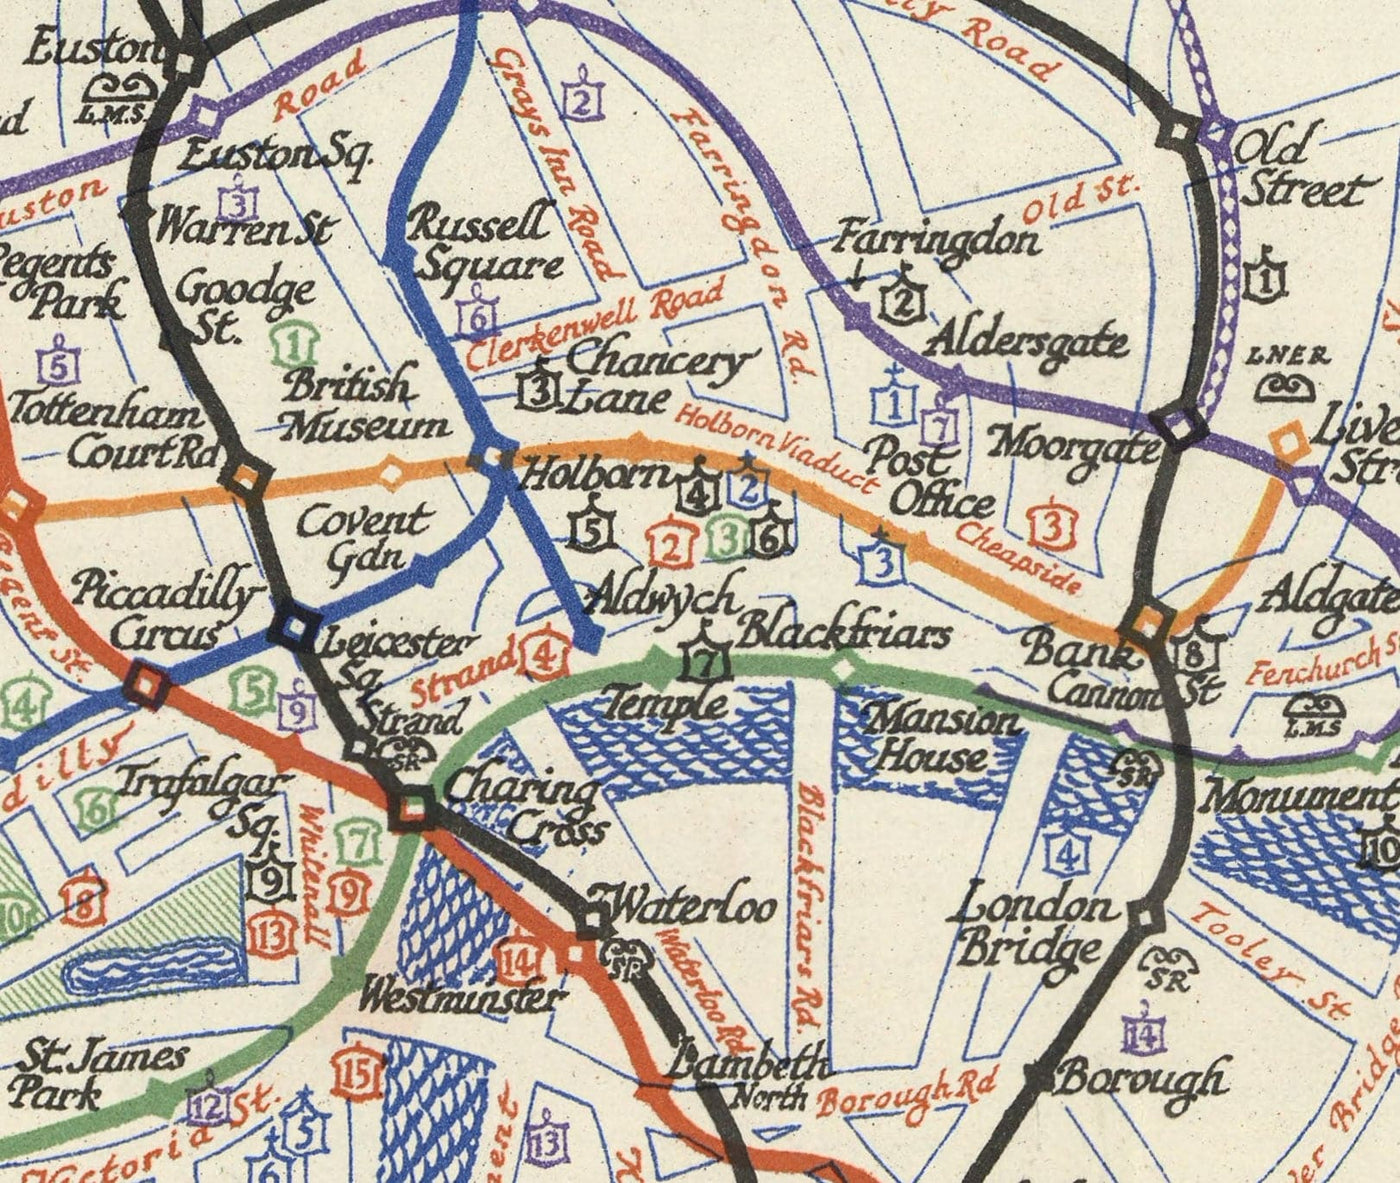 Mapa de tubos subterráneos Rare Old London, 1928 - Covent Garden, Piccadilly Circus, Central & District Line